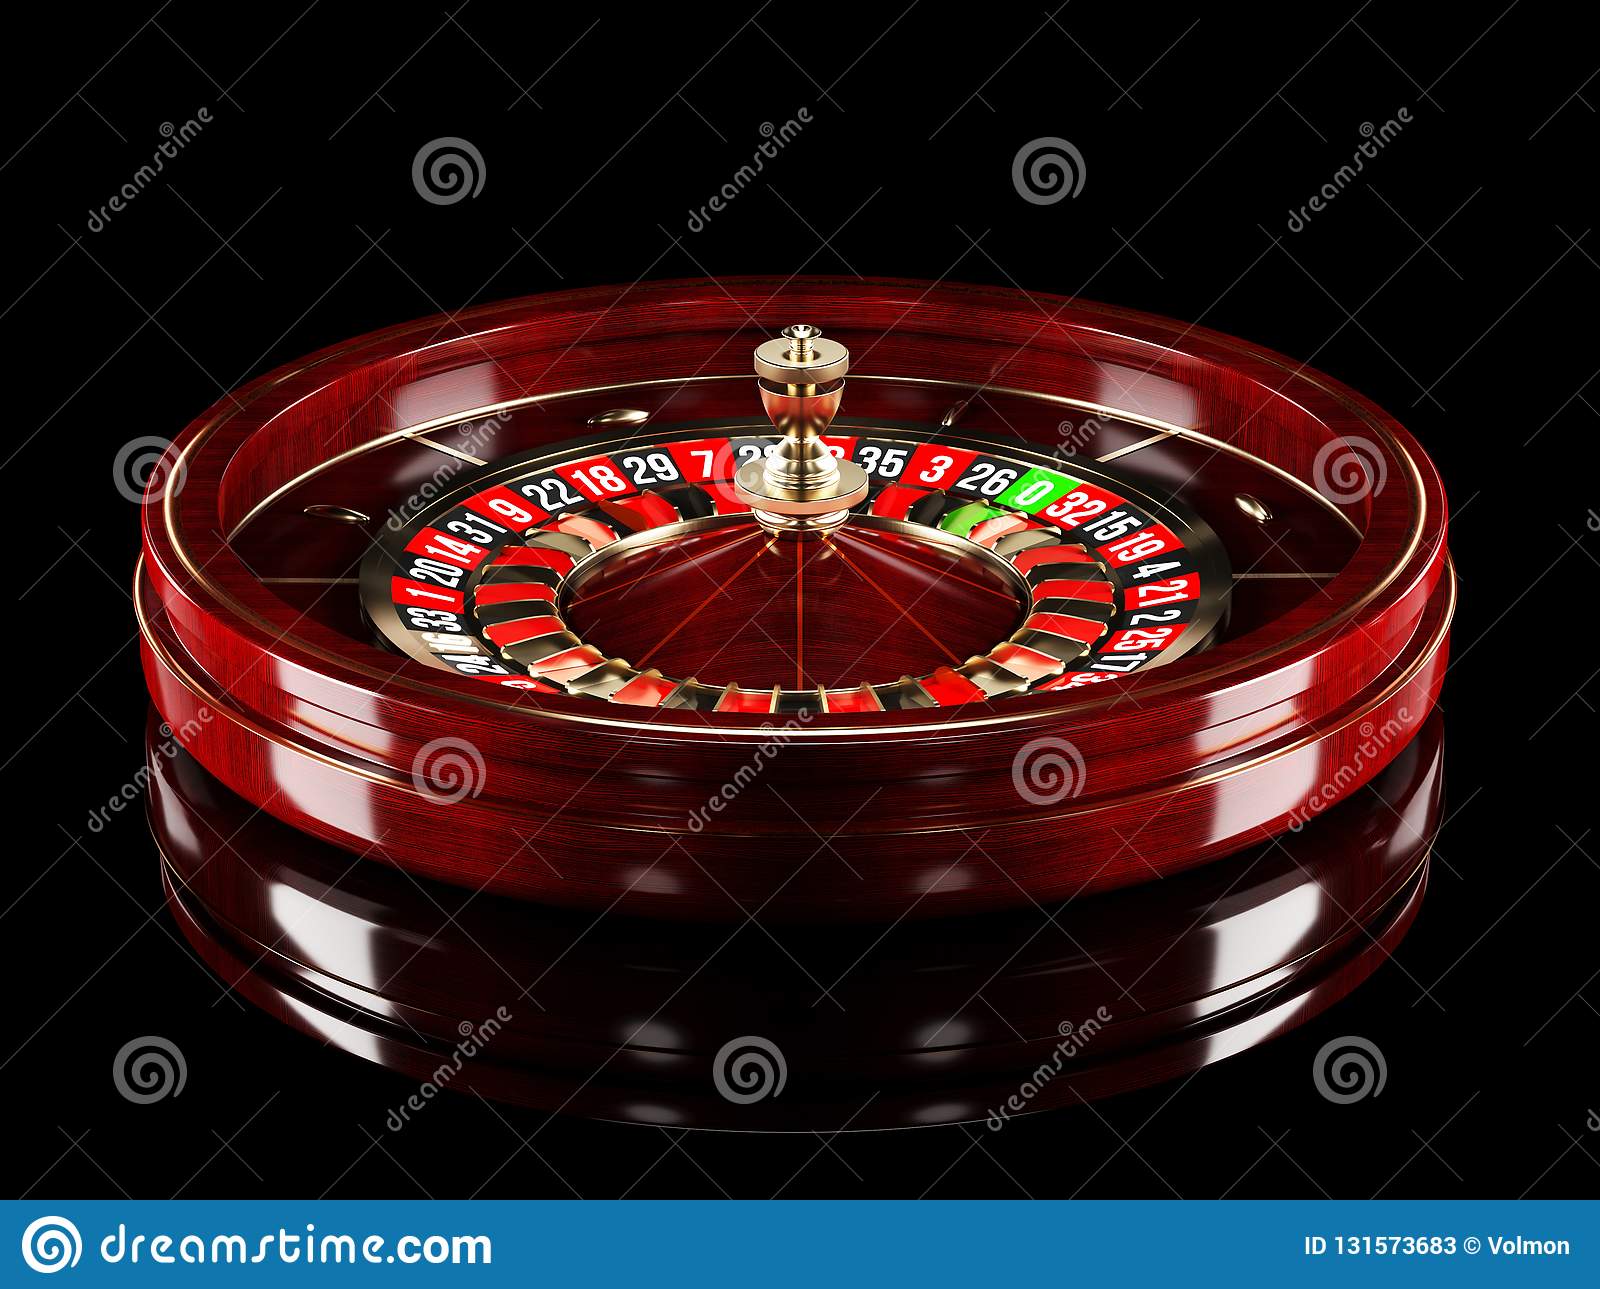 Superstar casino